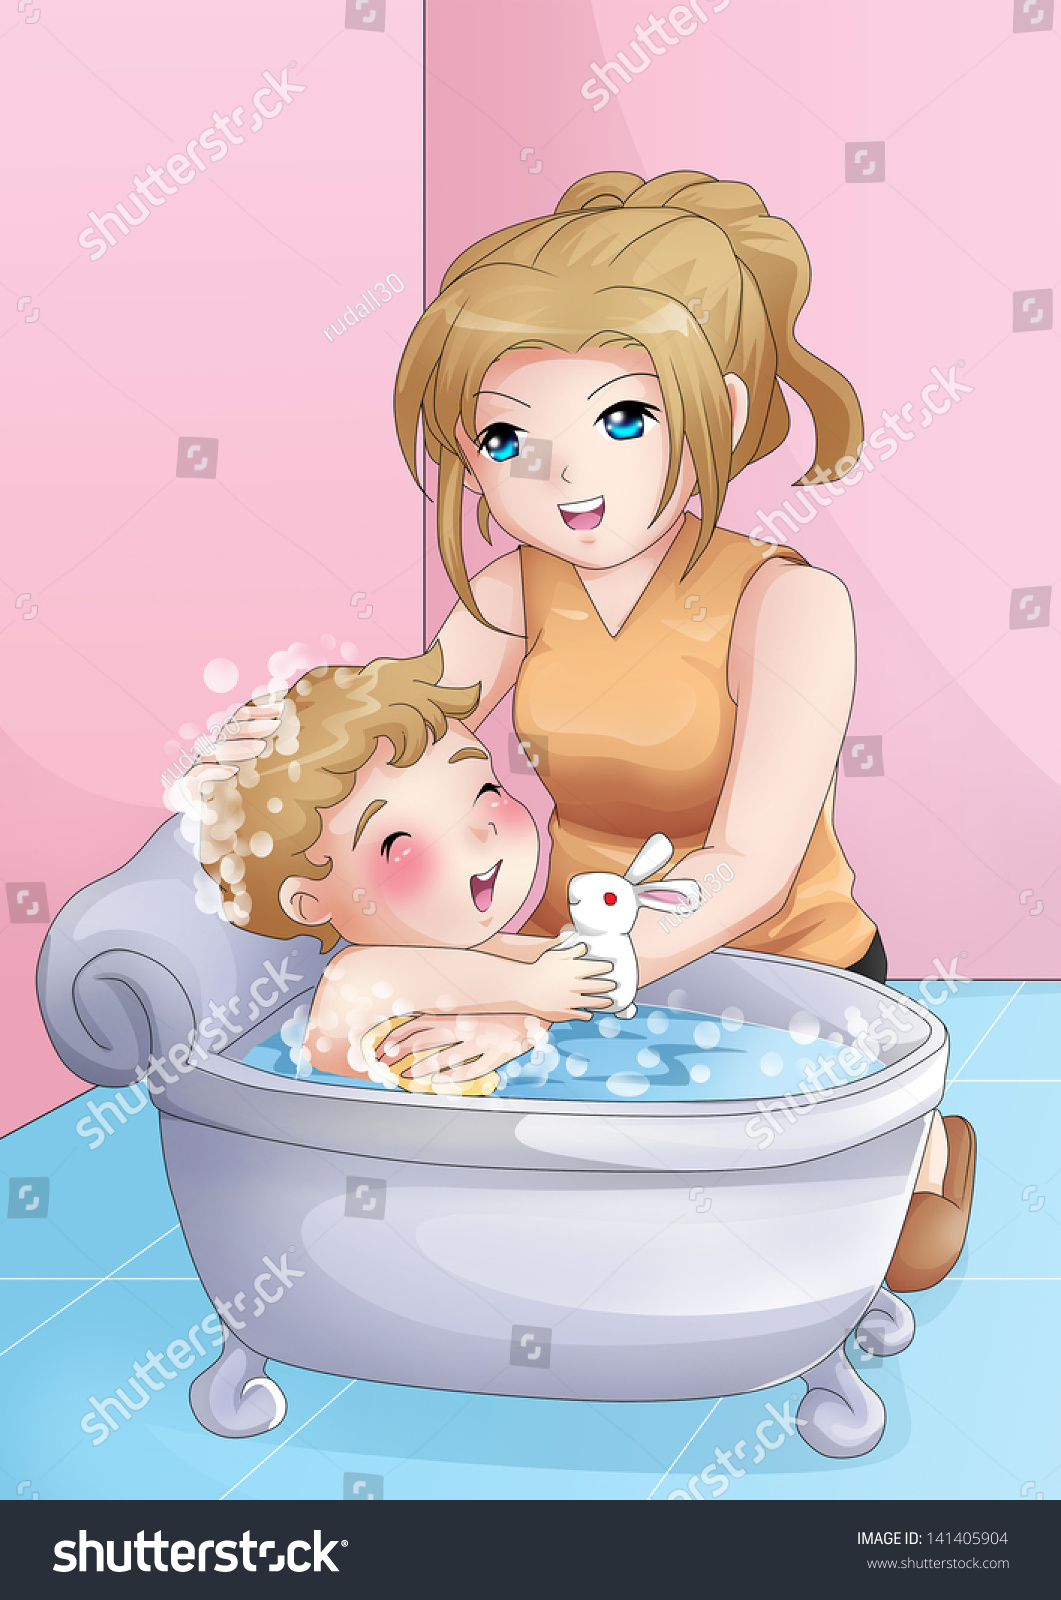 Cartoon Illustration Mother Bathing Her Child: ภาพประกอบสต็อก 141405904